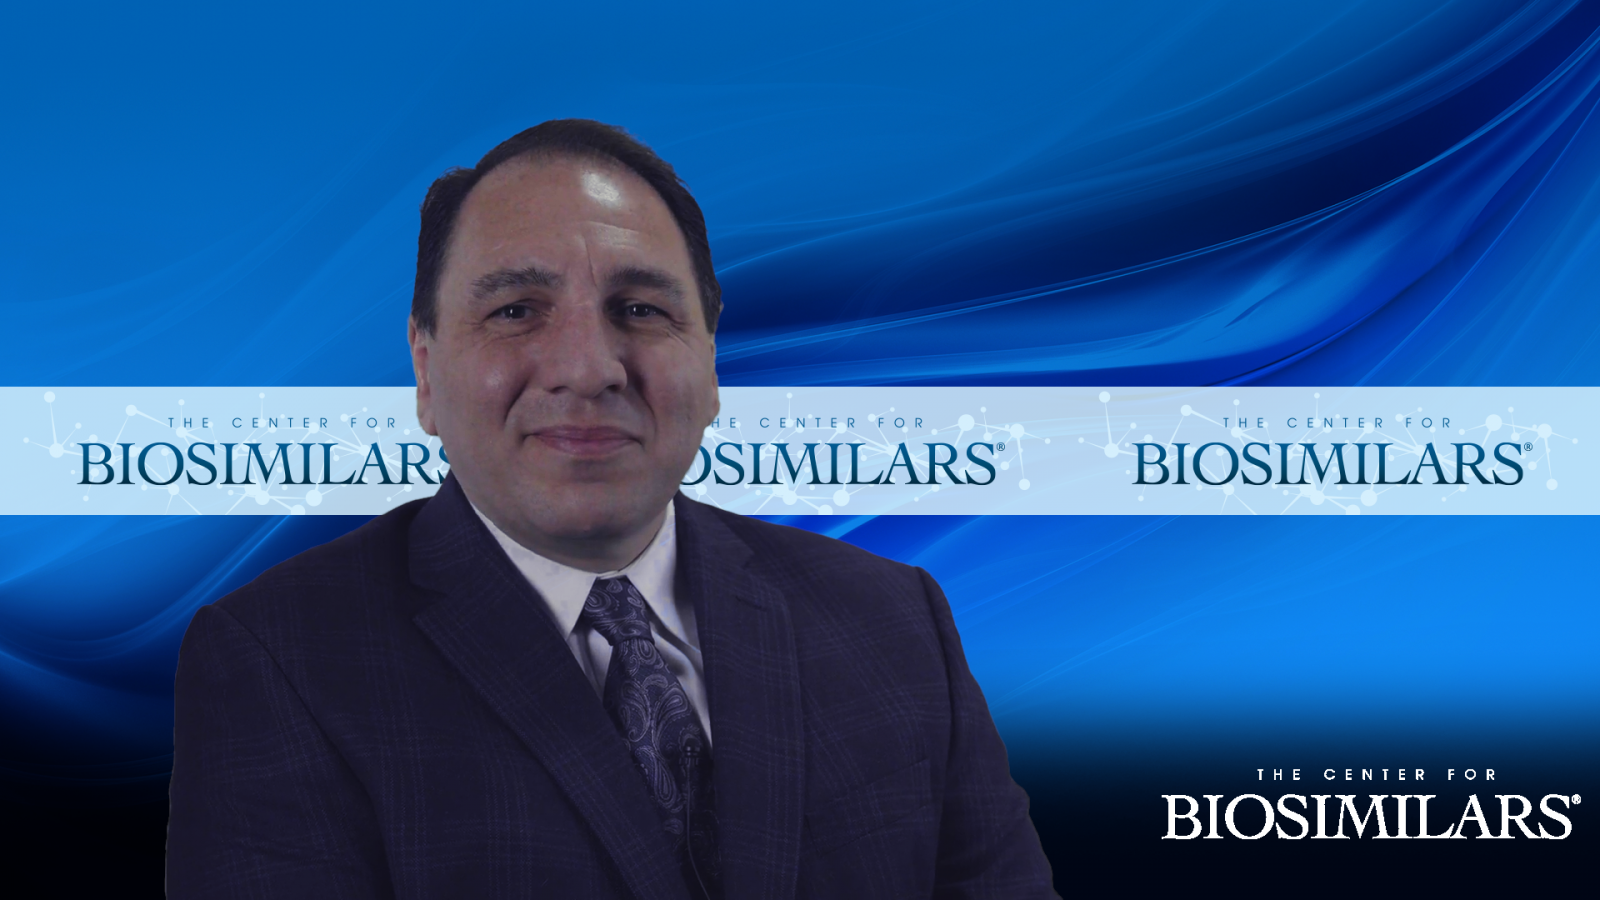 Are Biosimilars and Biologics Similar?